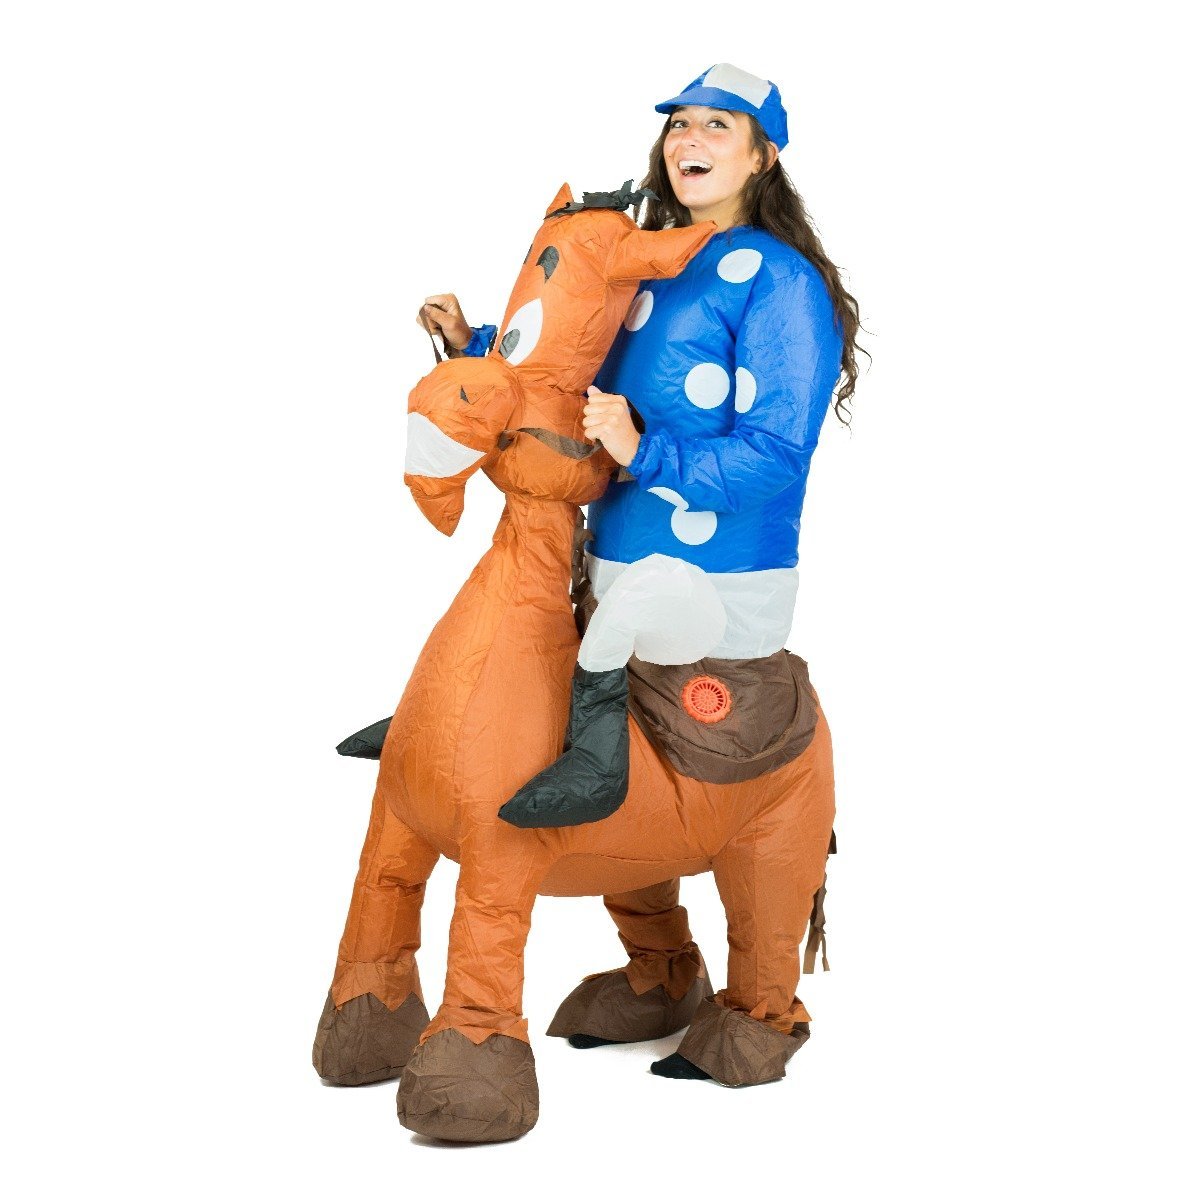 Bodysocks - Inflatable Jockey Costume